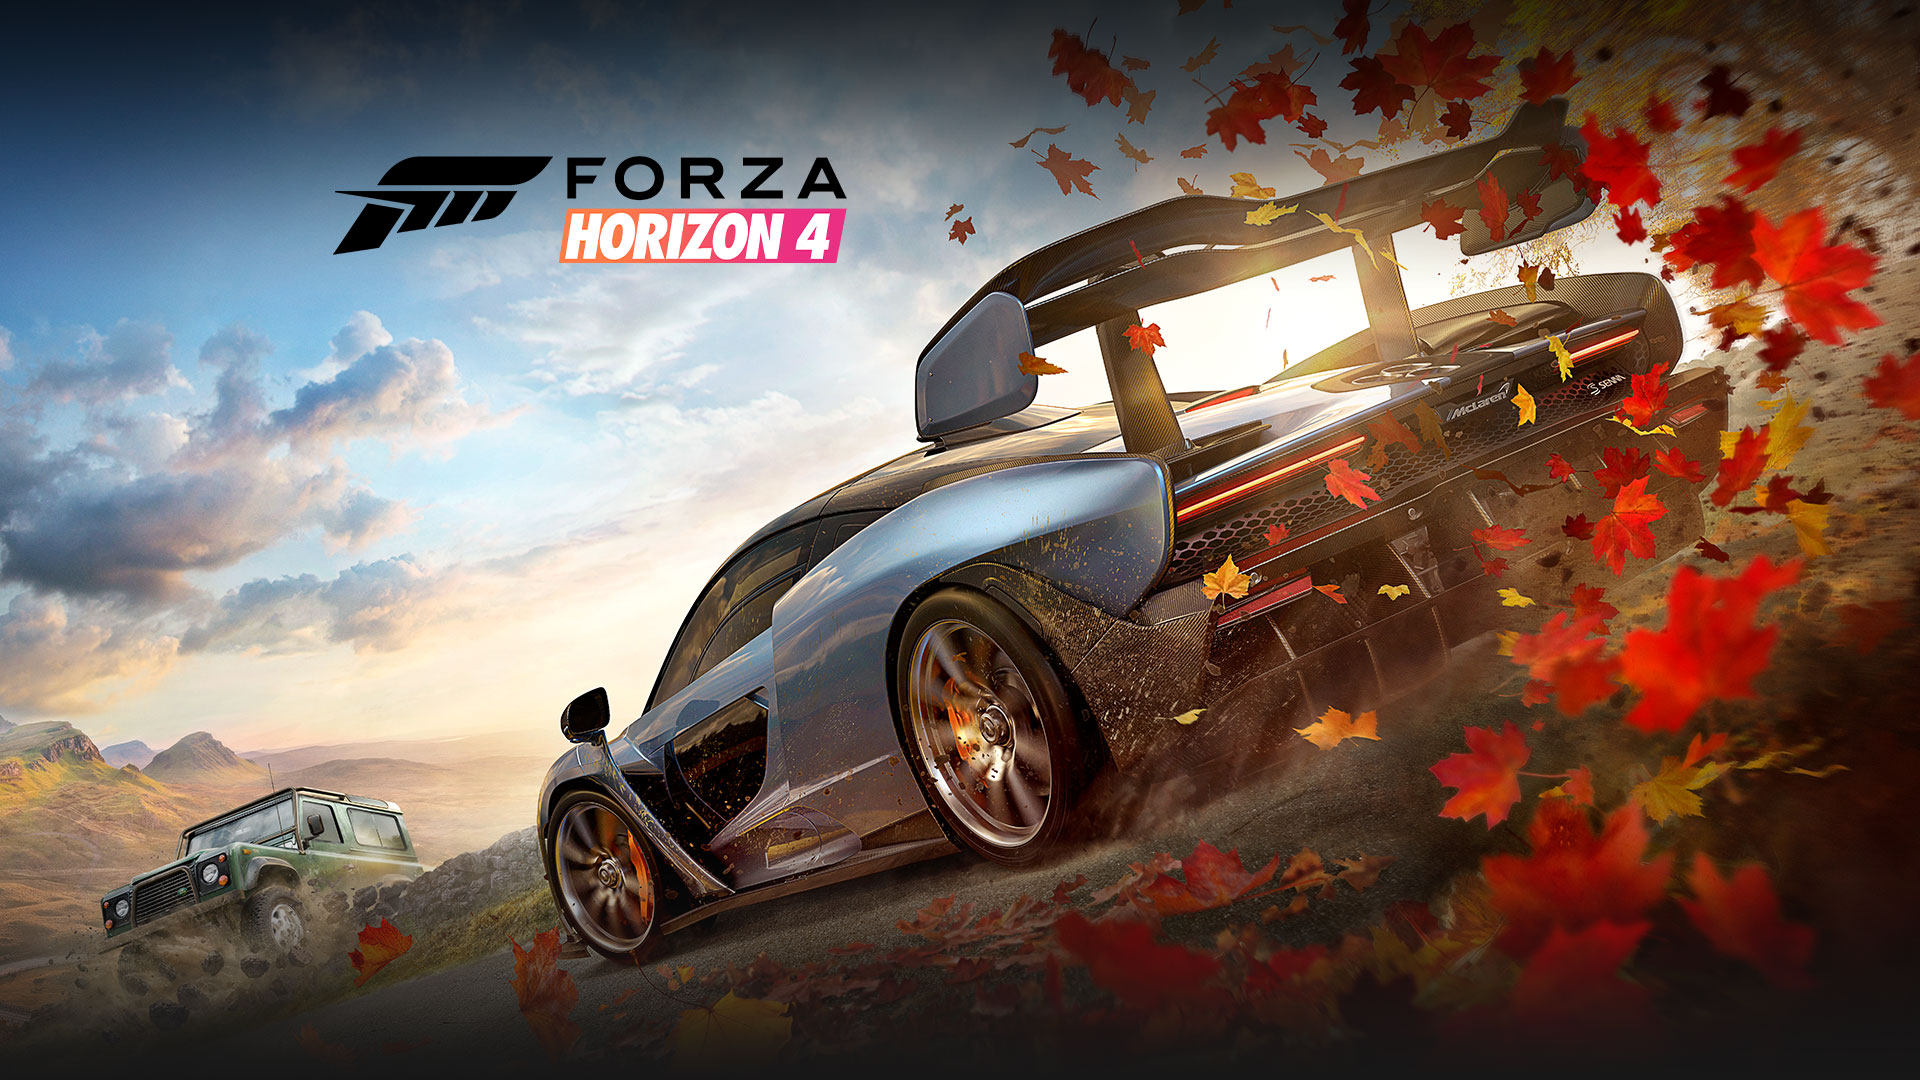 Player's favorite games: Forza Horizon 4